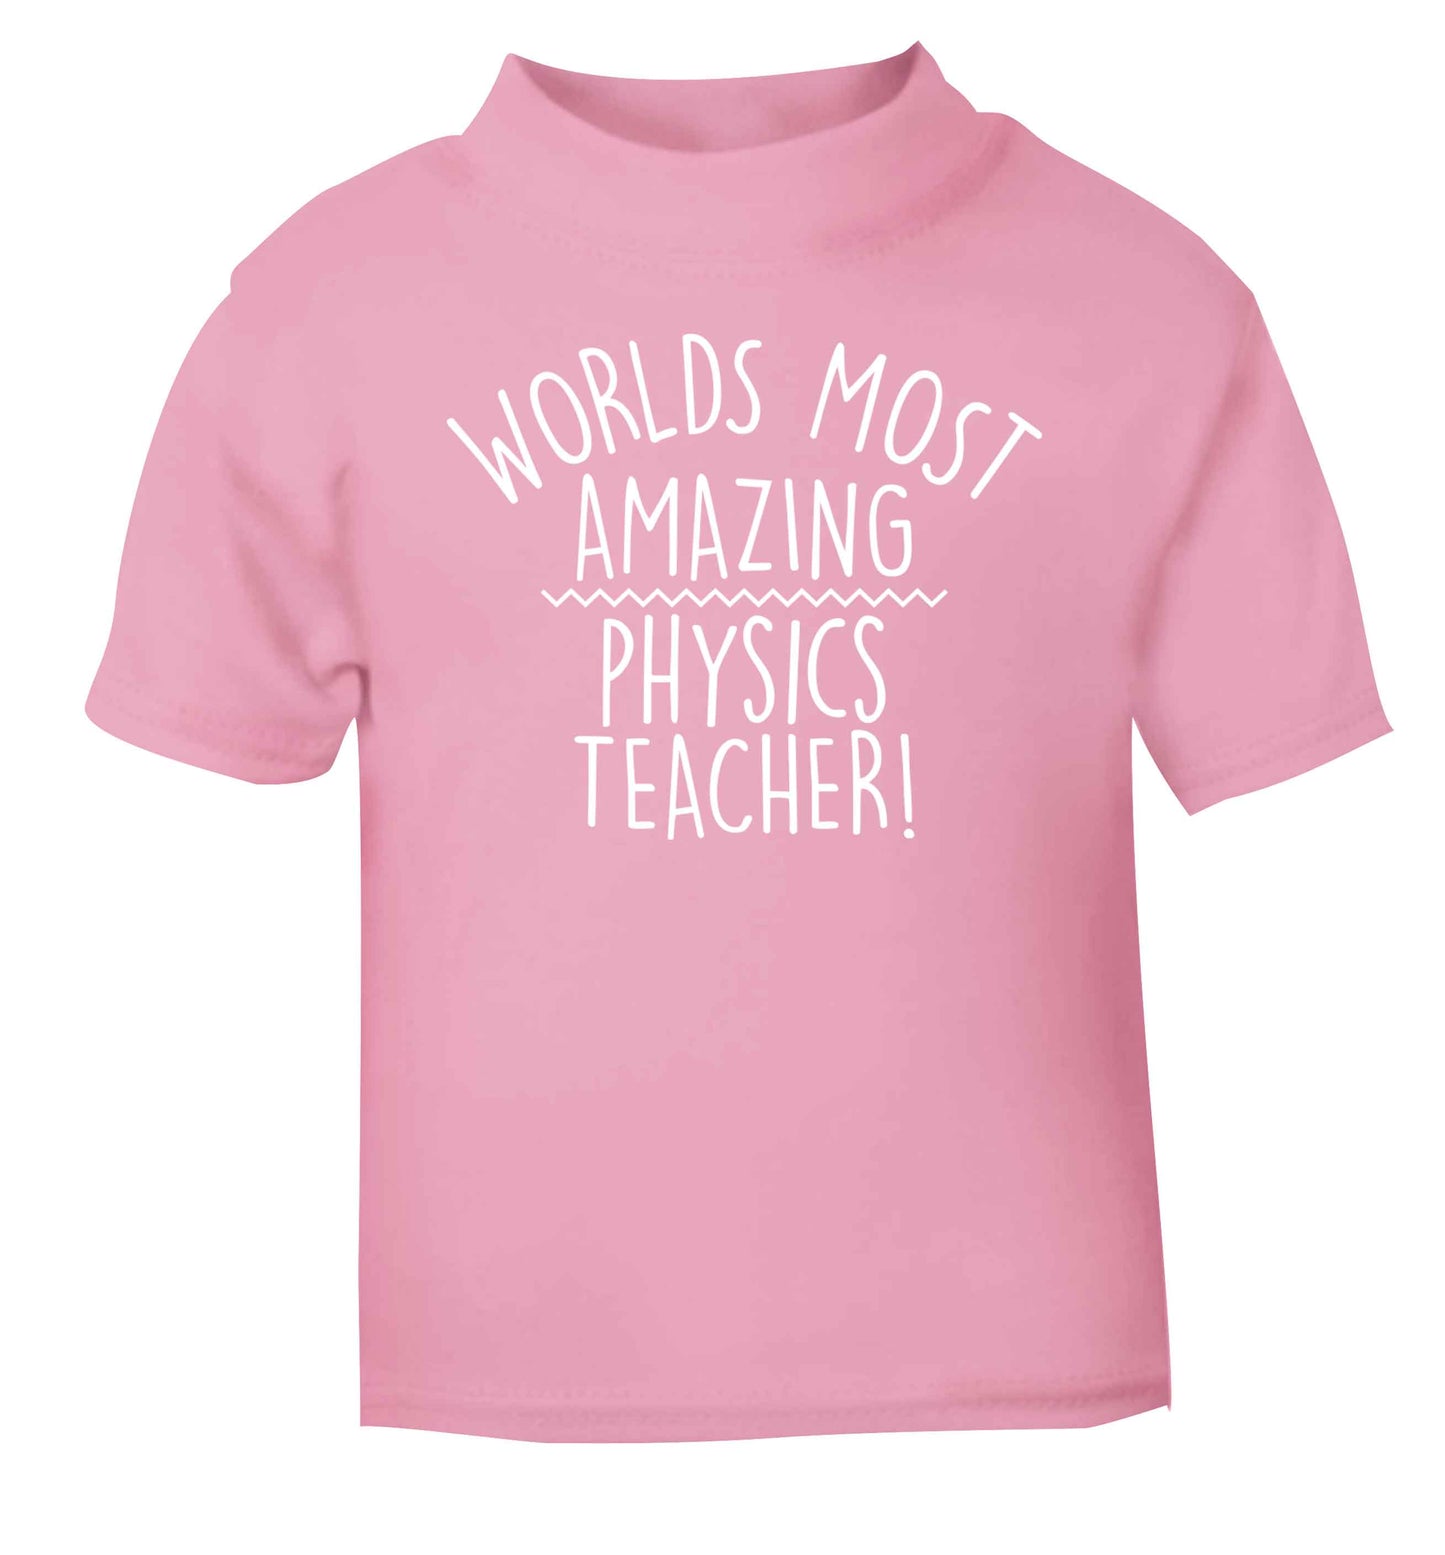 Worlds most amazing physics teacher light pink baby toddler Tshirt 2 Years